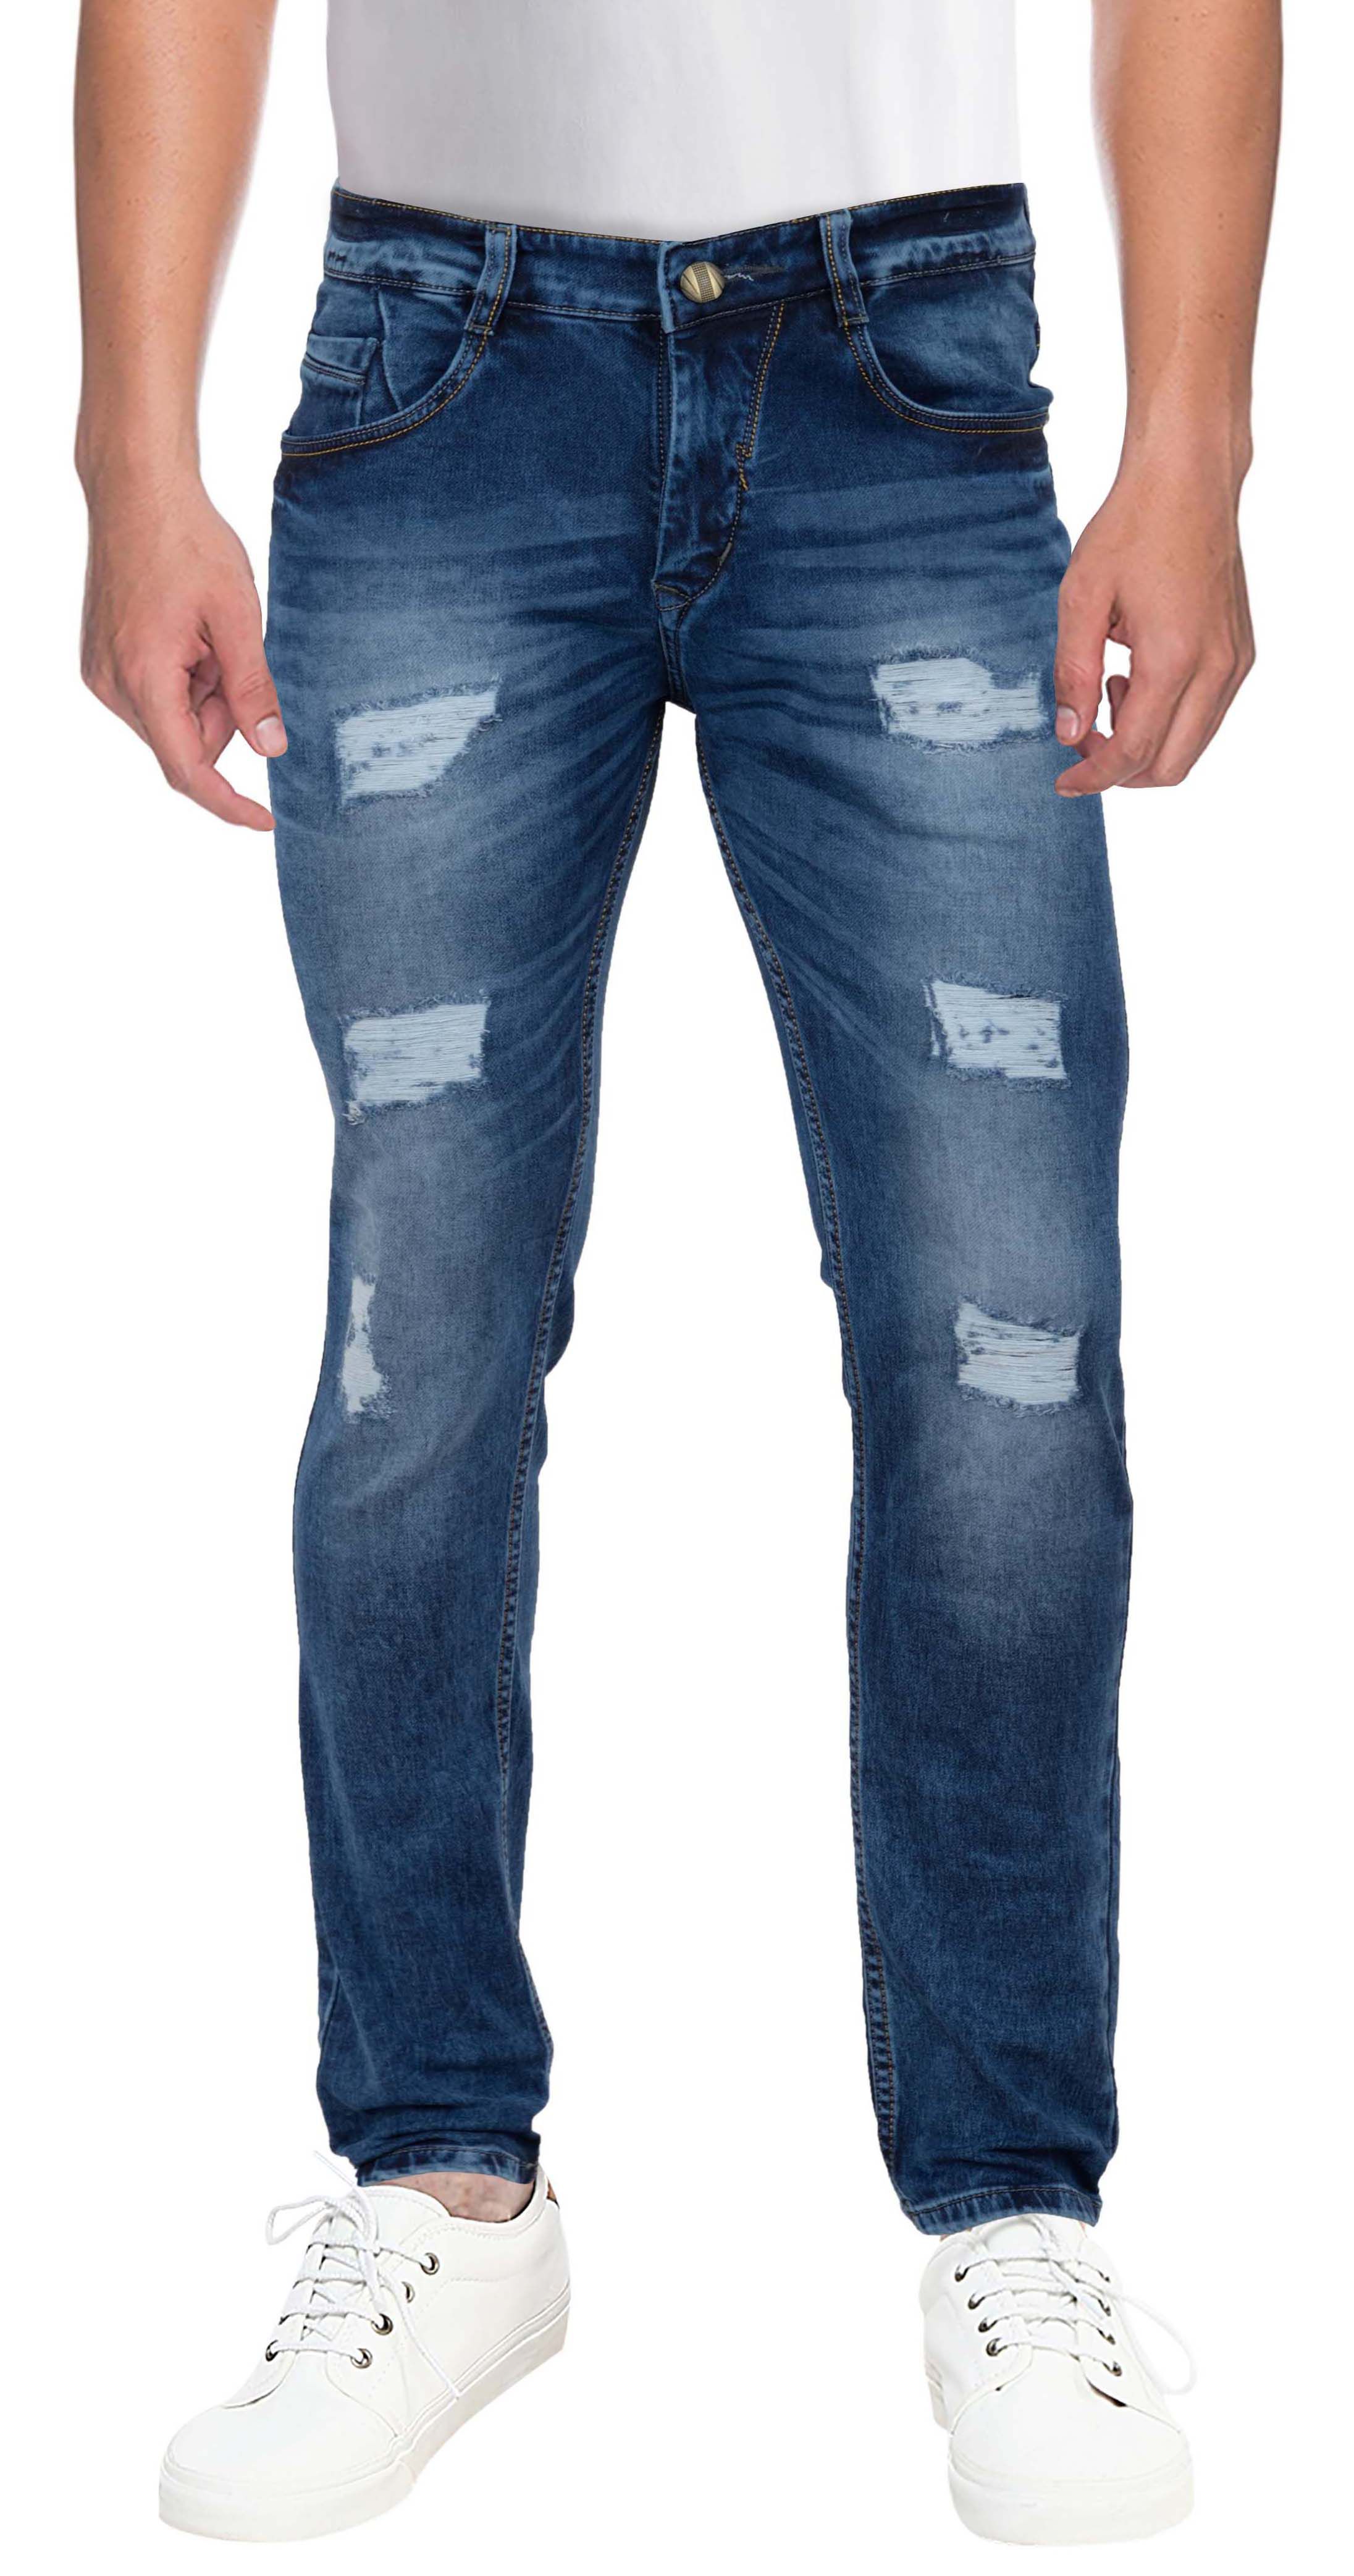 Royal Jeans Blue Slim Jeans - Buy Royal Jeans Blue Slim Jeans Online at ...